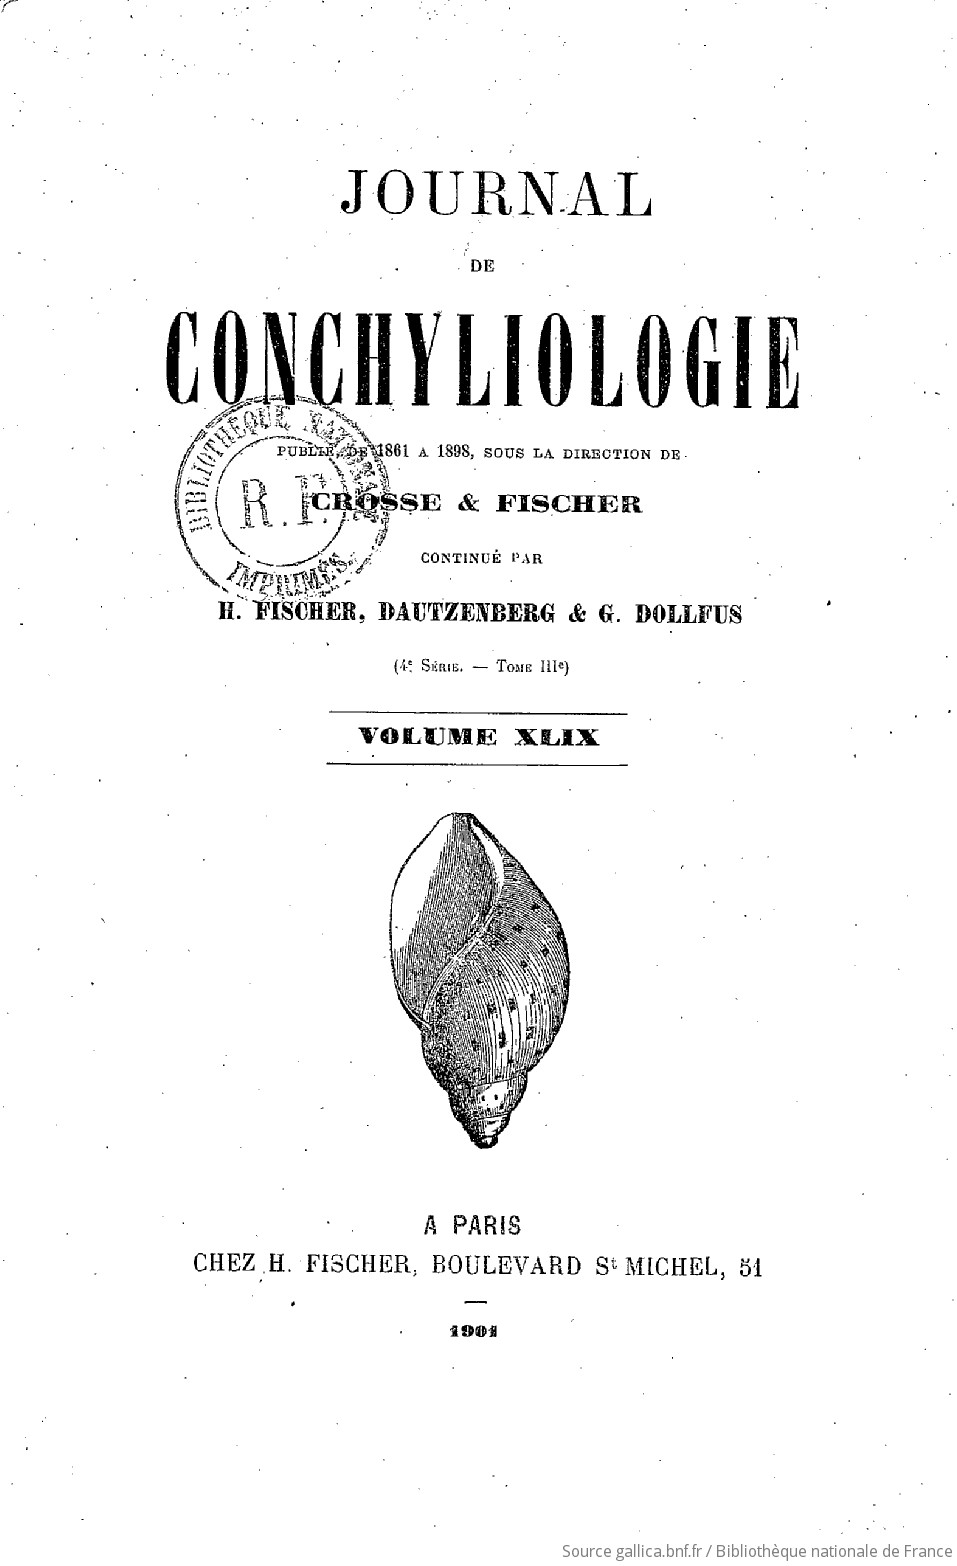 Journal de conchyliologie